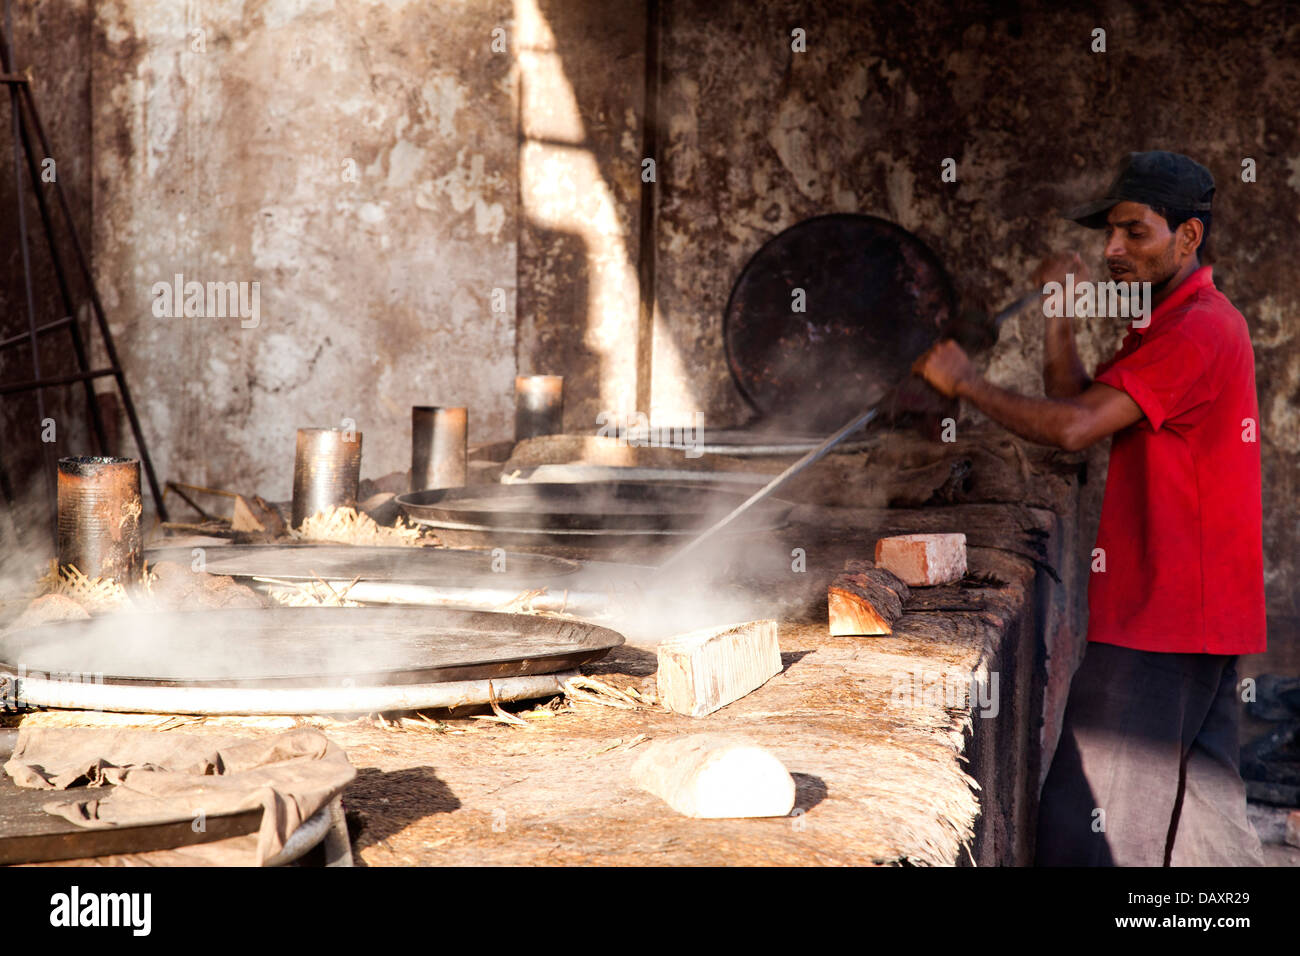 Les hommes de préparer des aliments, Charminar, Hyderabad, Andhra Pradesh, Inde Banque D'Images